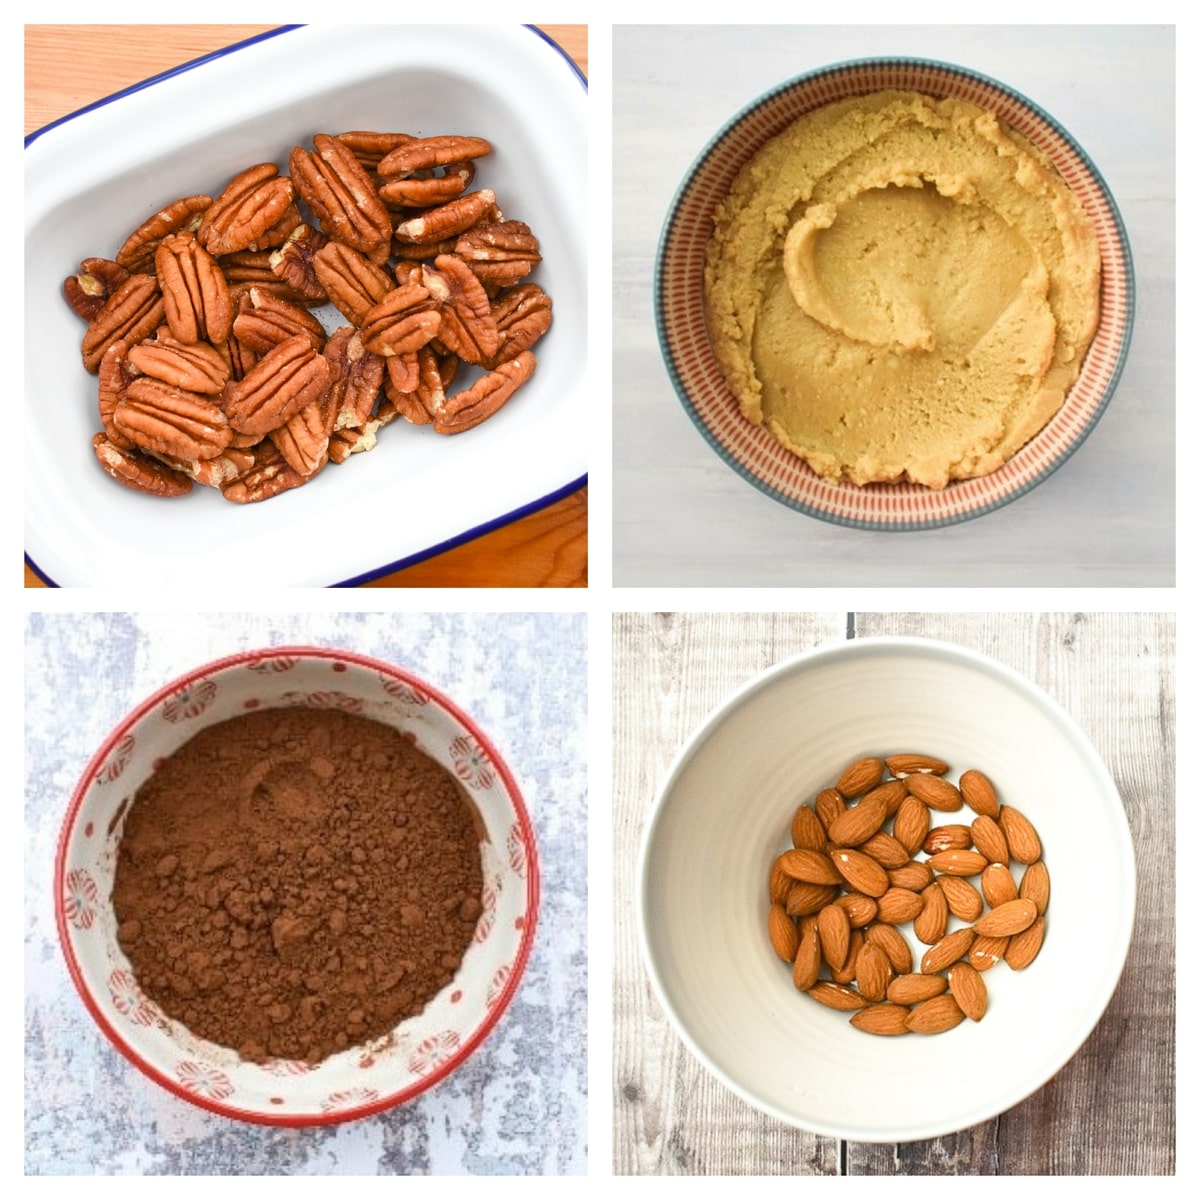 key ingredients to make vegan pecan pie (peanut butter, cocoa powder, almonds & pecans)